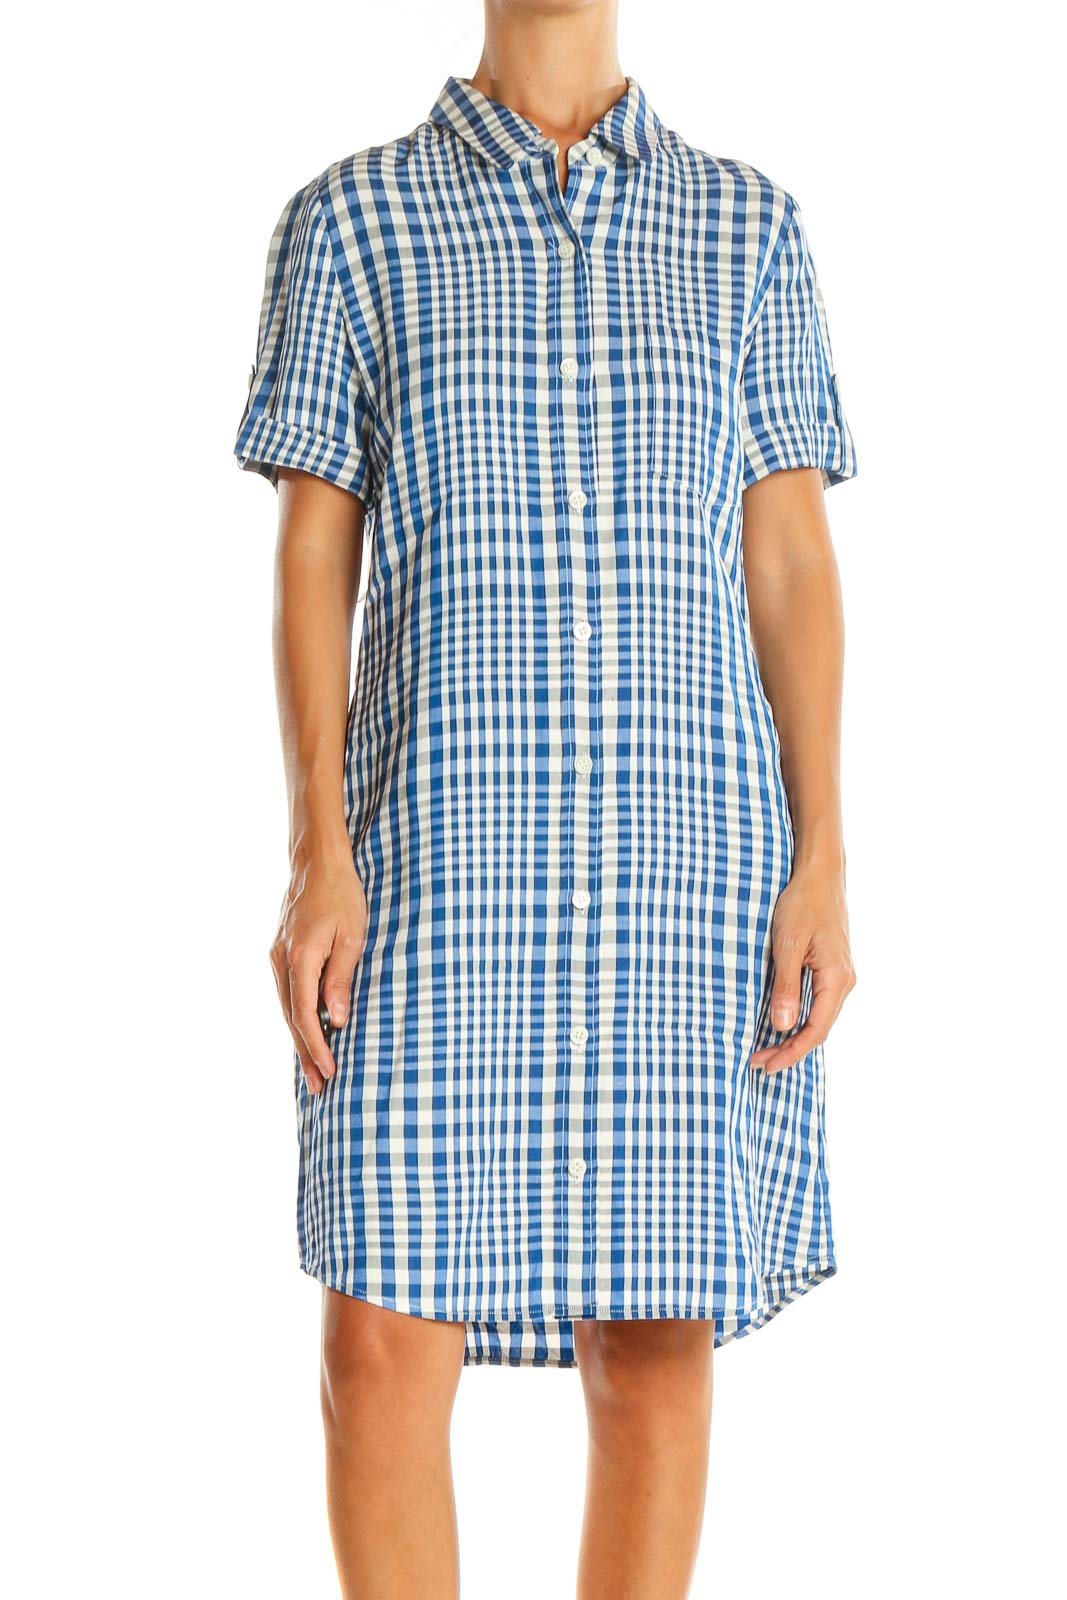 Blue Checker Print Day T-shirt Dress Front